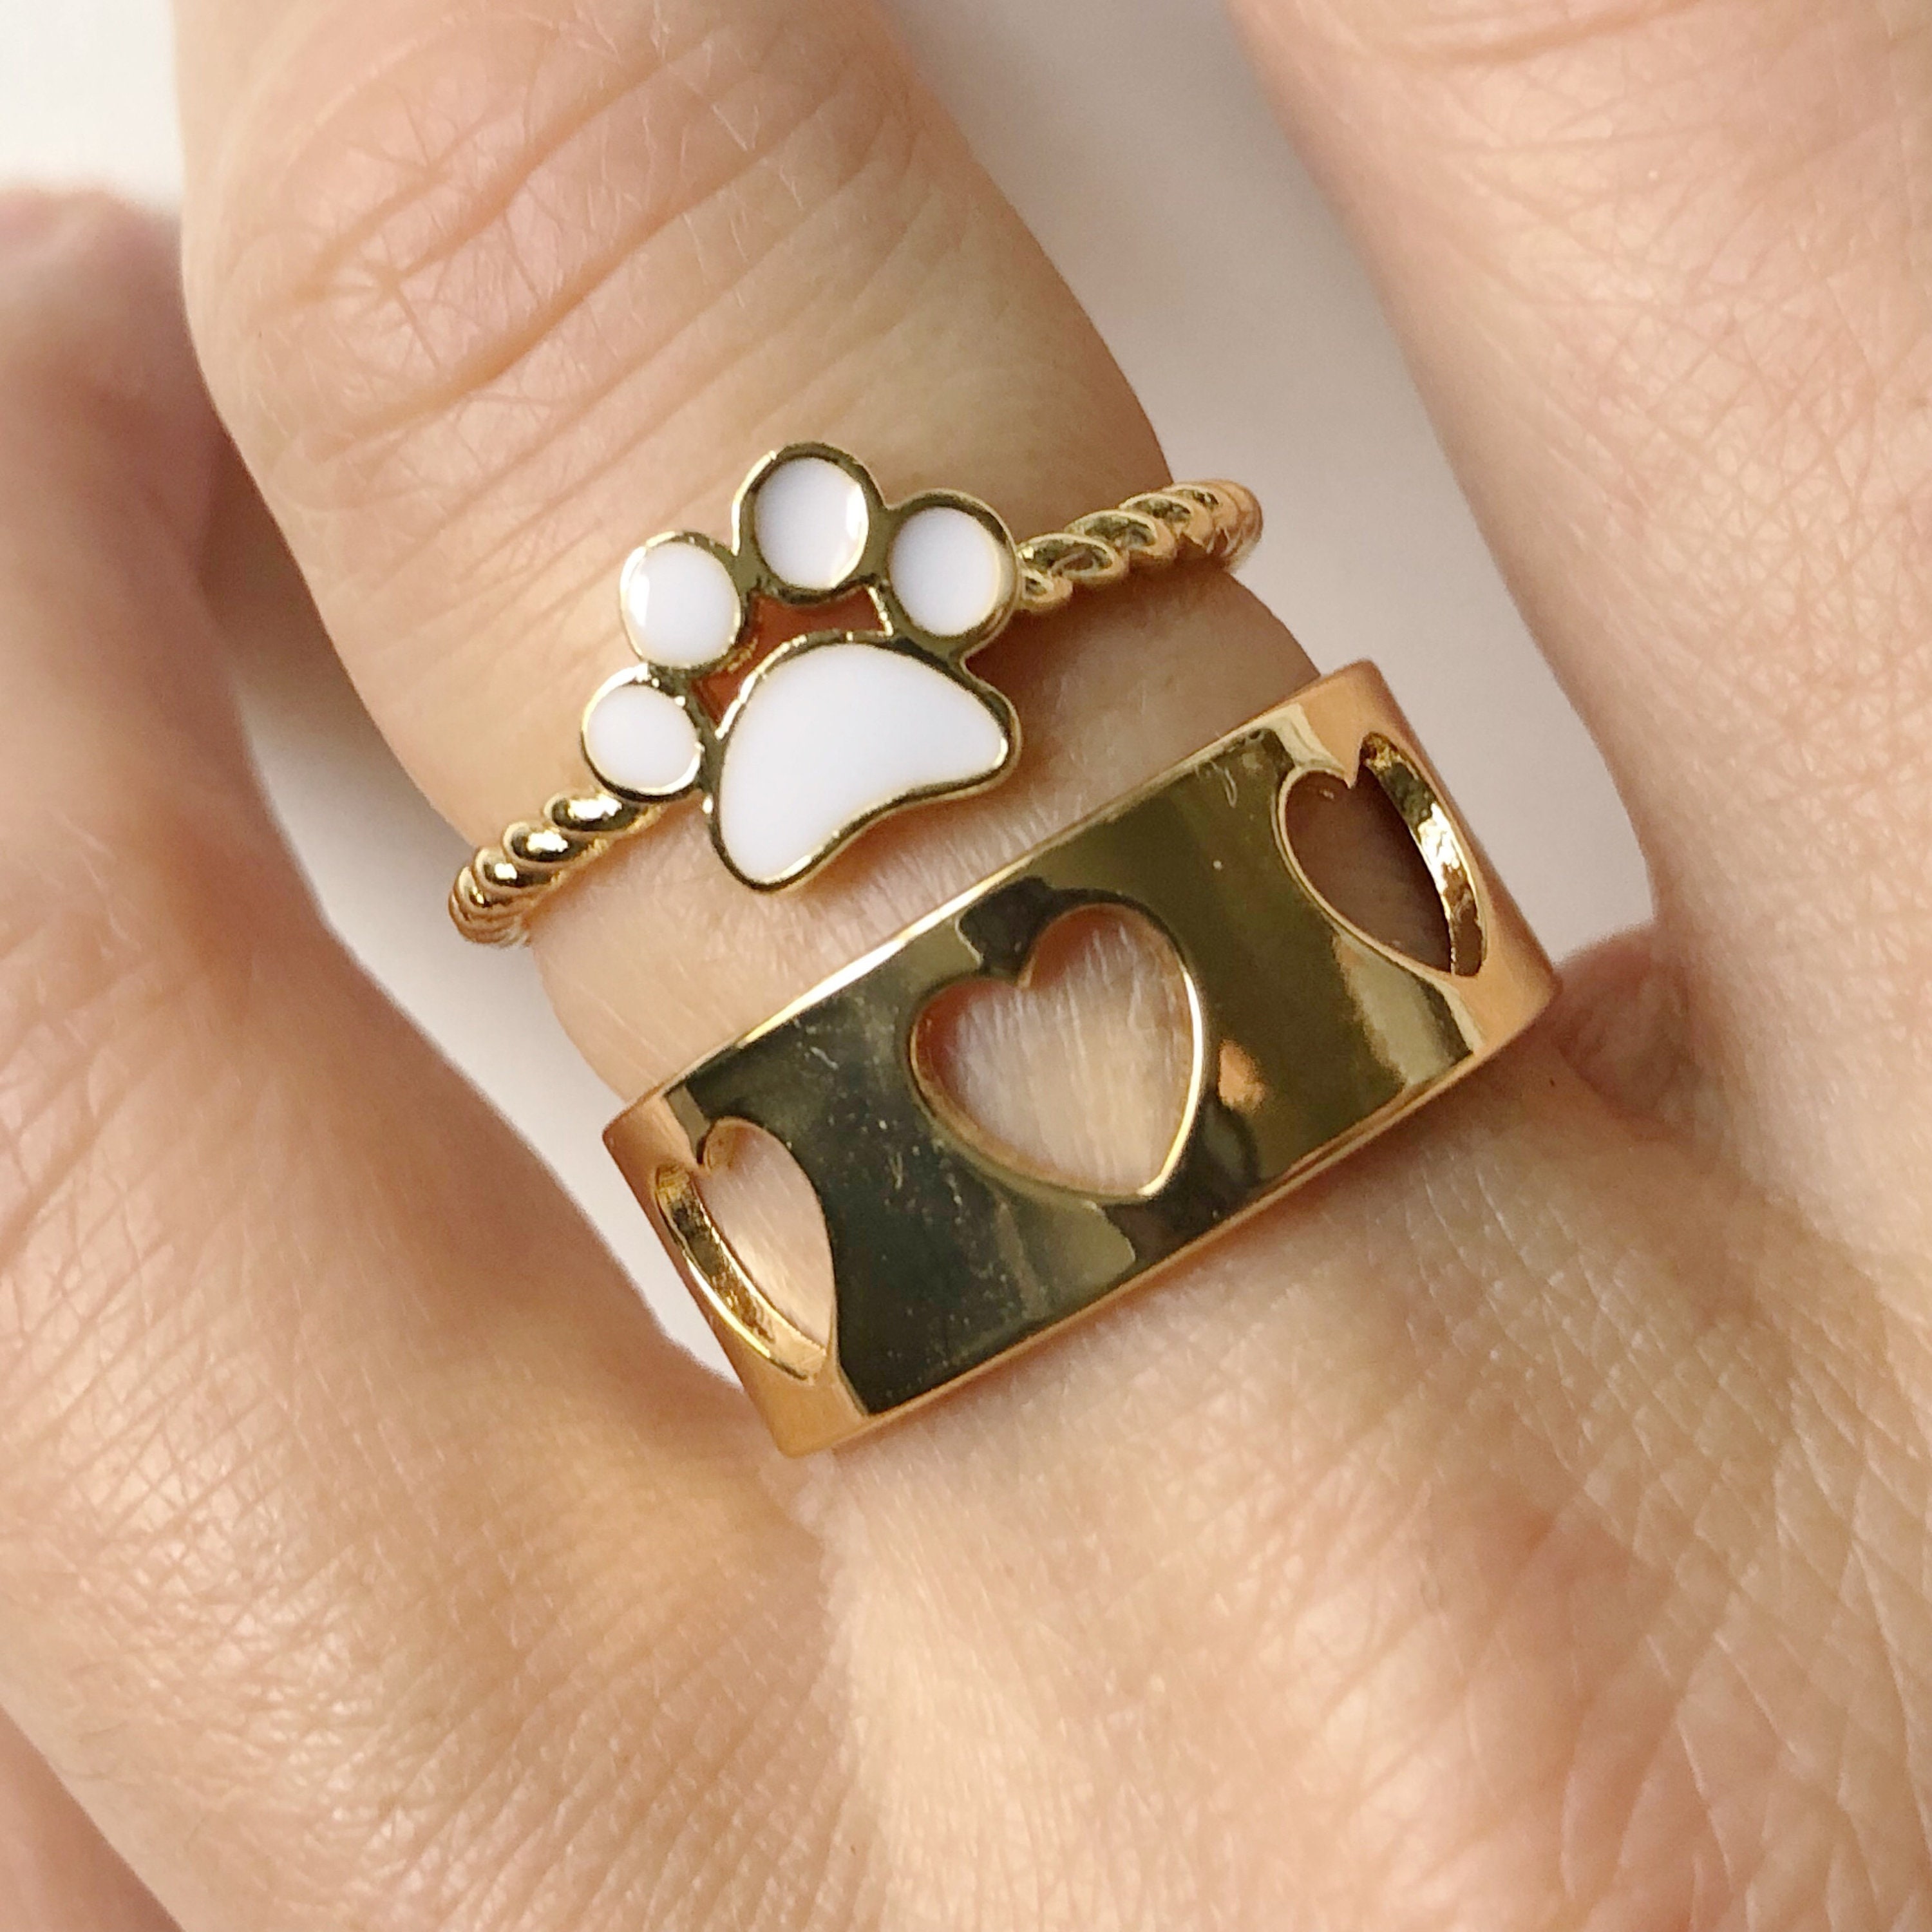 Amazon.com: Dainty 10k Yellow Gold High Polish Dog Paw Print Ring (Size 4):  Clothing, Shoes & Jewelry